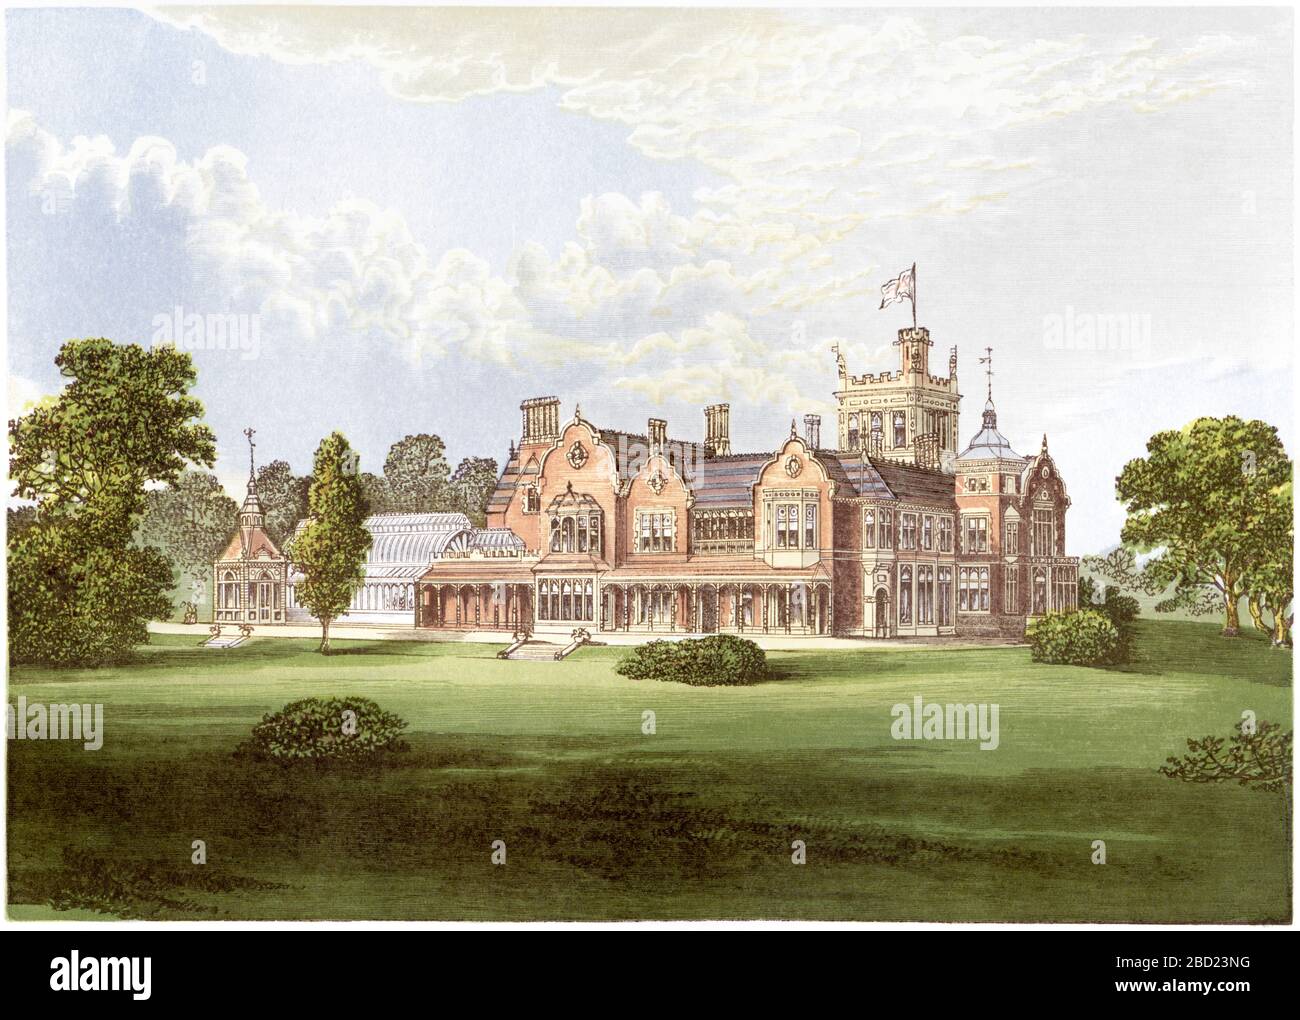 Una ilustración coloreada de Caen Wood House (Casa Athlone) en Highgate, Londres, escaneada a alta resolución de un libro impreso en 1870. Foto de stock